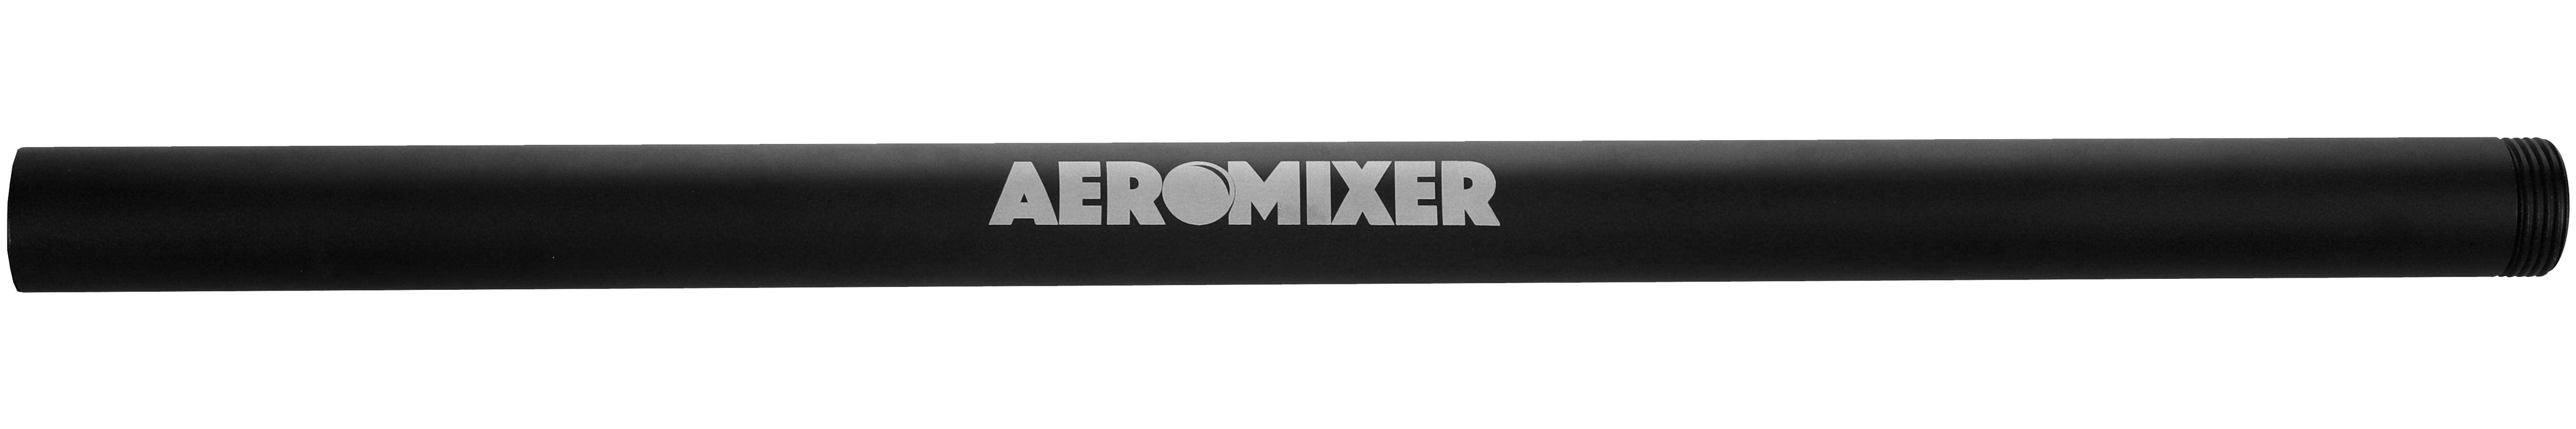 Aeromixer Watering Wand Kit Nutrients AeroMixer 